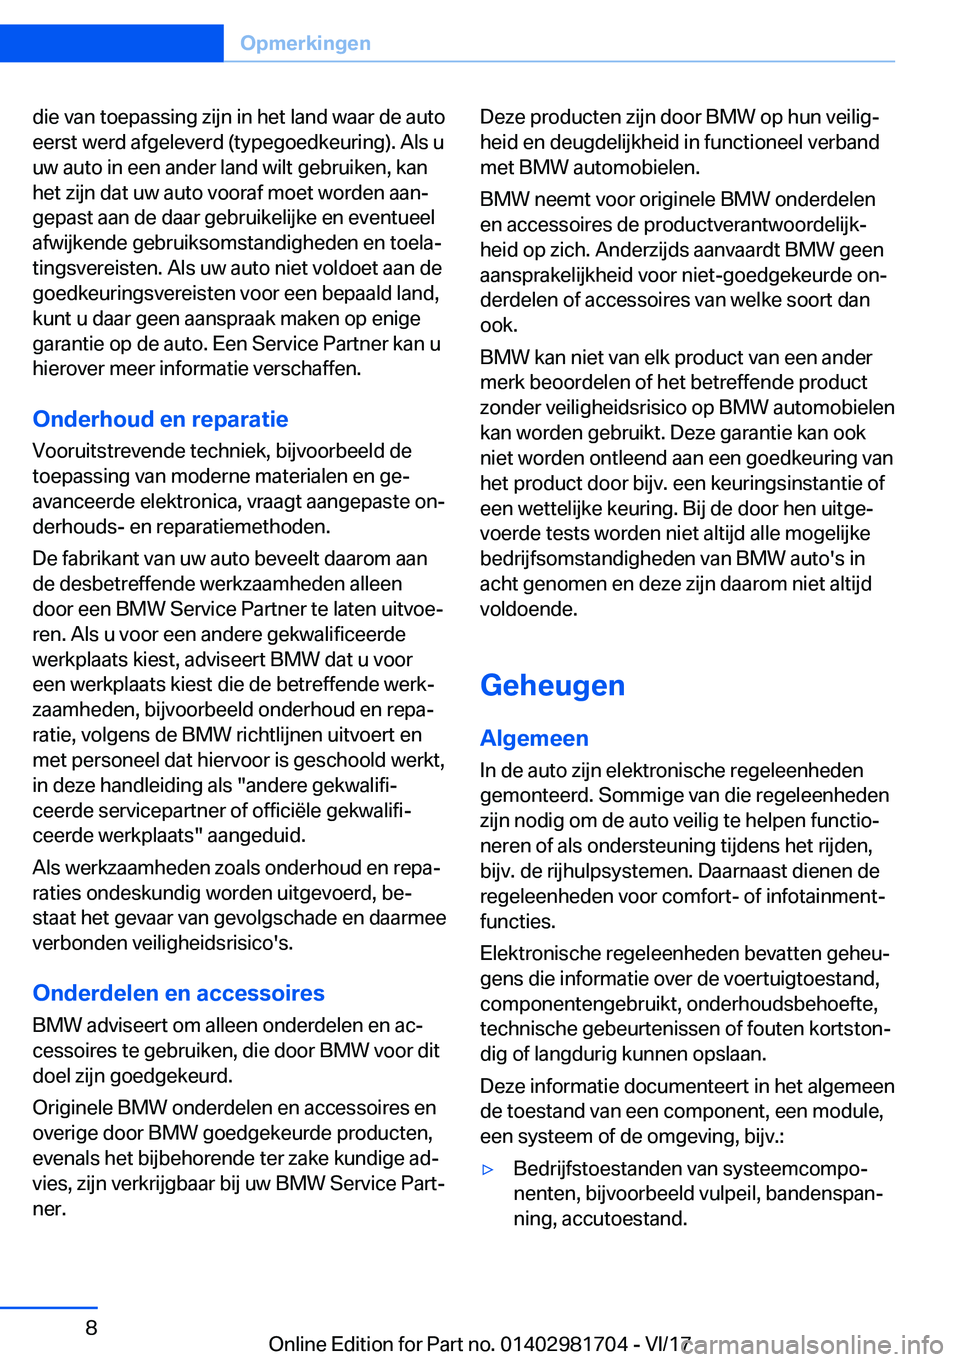 BMW M4 2018  Instructieboekjes (in Dutch) �d�i�e� �v�a�n� �t�o�e�p�a�s�s�i�n�g� �z�i�j�n� �i�n� �h�e�t� �l�a�n�d� �w�a�a�r� �d�e� �a�u�t�o
�e�e�r�s�t� �w�e�r�d� �a�f�g�e�l�e�v�e�r�d� �(�t�y�p�e�g�o�e�d�k�e�u�r�i�n�g�)�.� �A�l�s� �u �u�w� �a�u